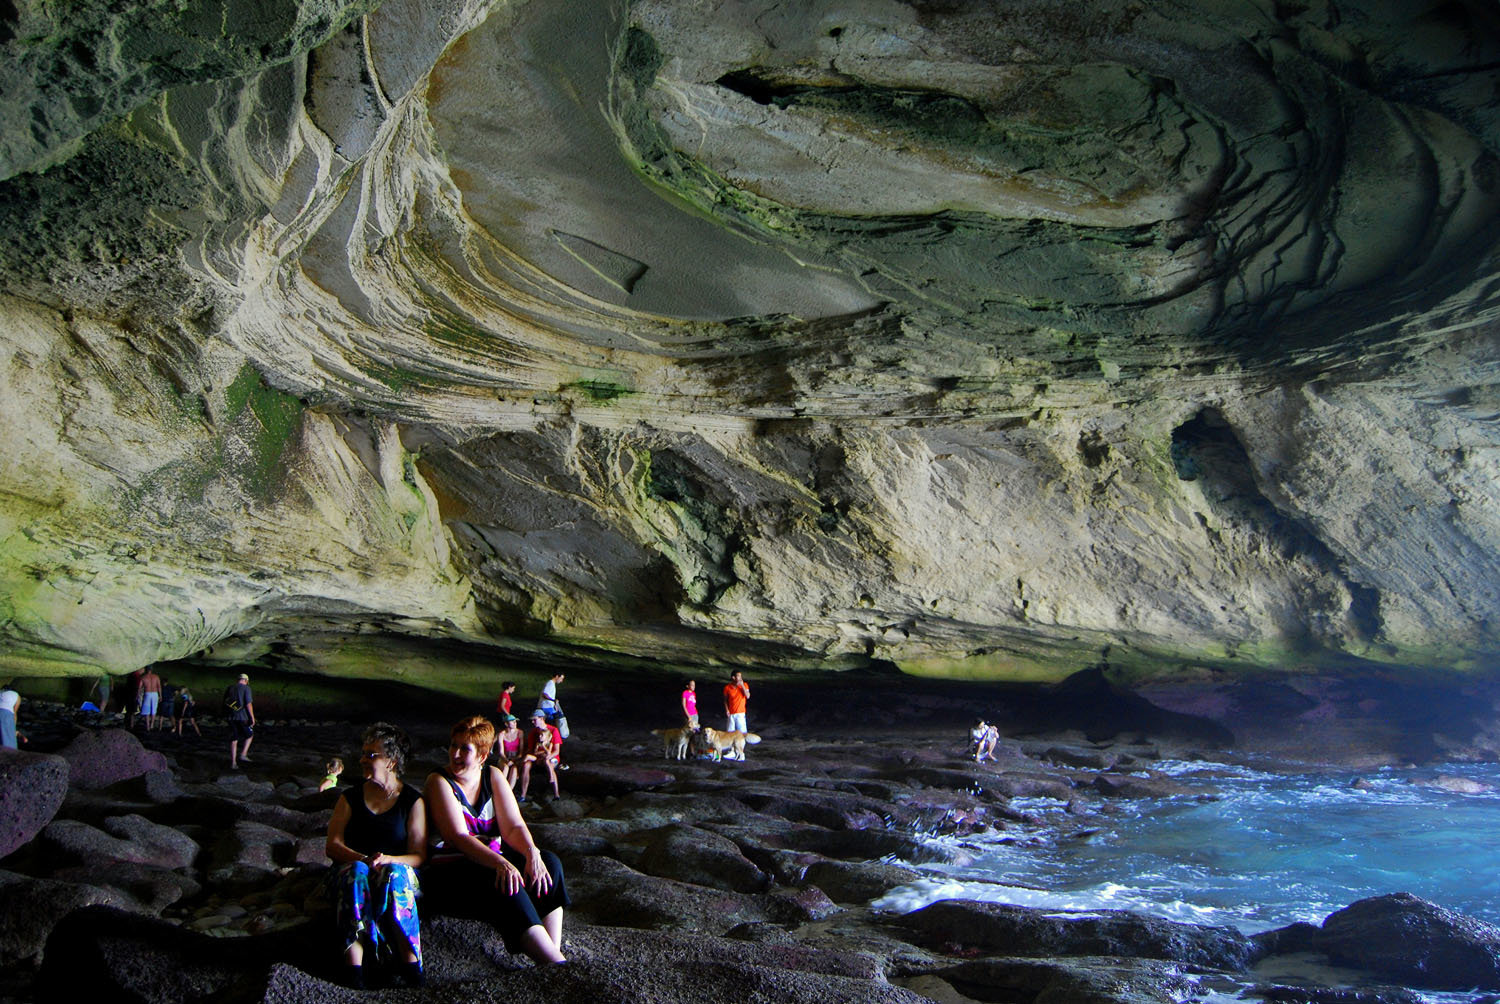 waenhuiskrans-cave (6)